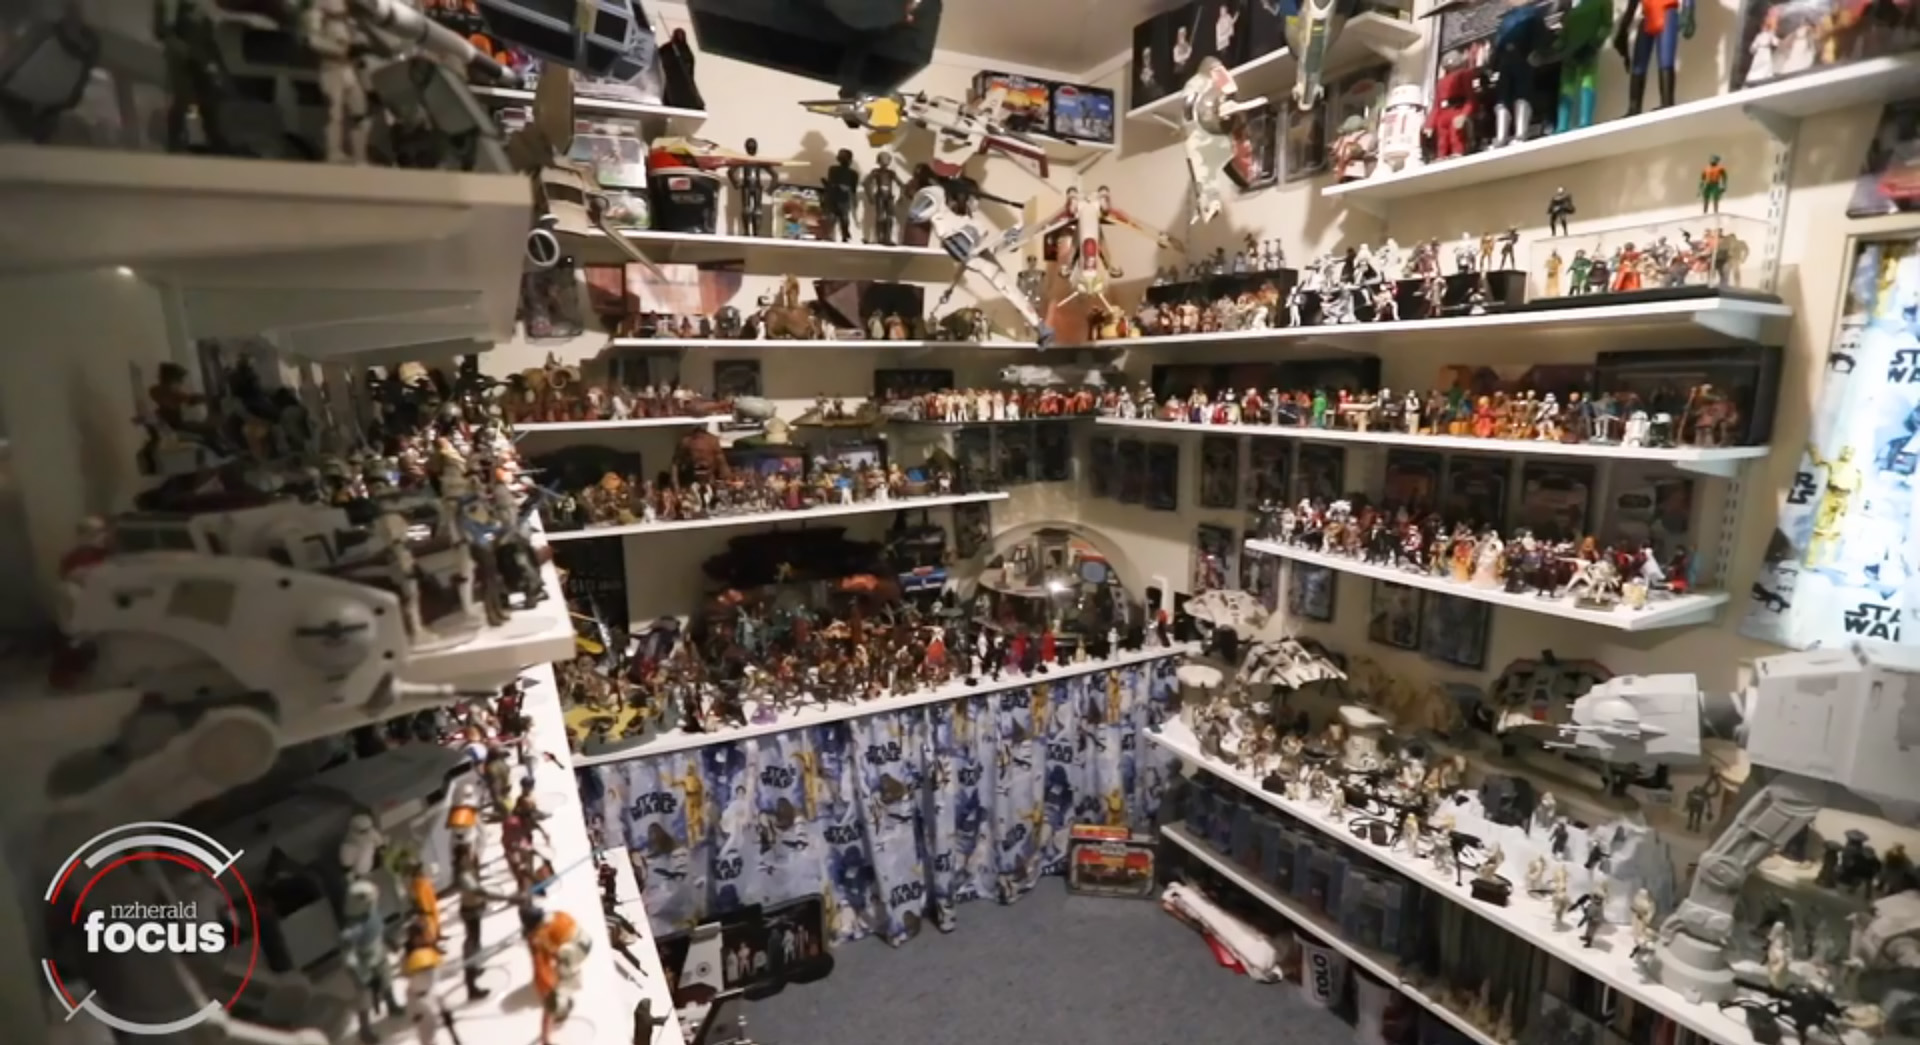 Star Wars Collection Room (credit: NZ Herald)